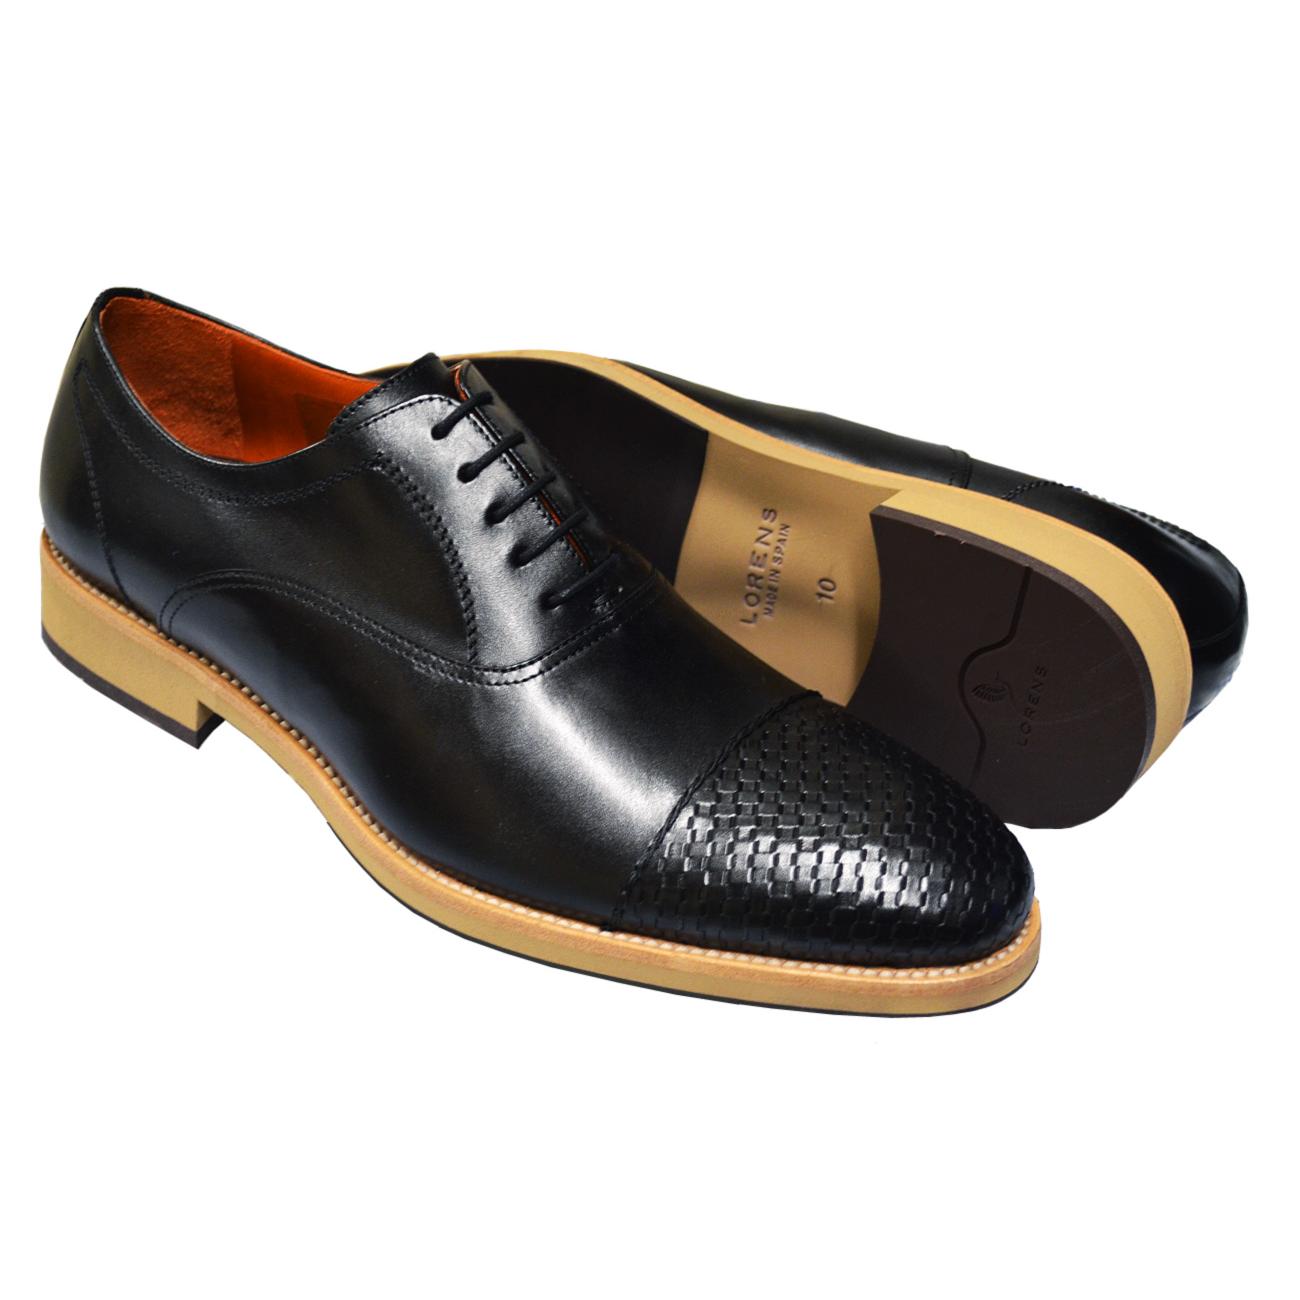 Lorens Elias Black Genuine Calfskin / Woven Cap Toe Oxford Shoes - $249 ...